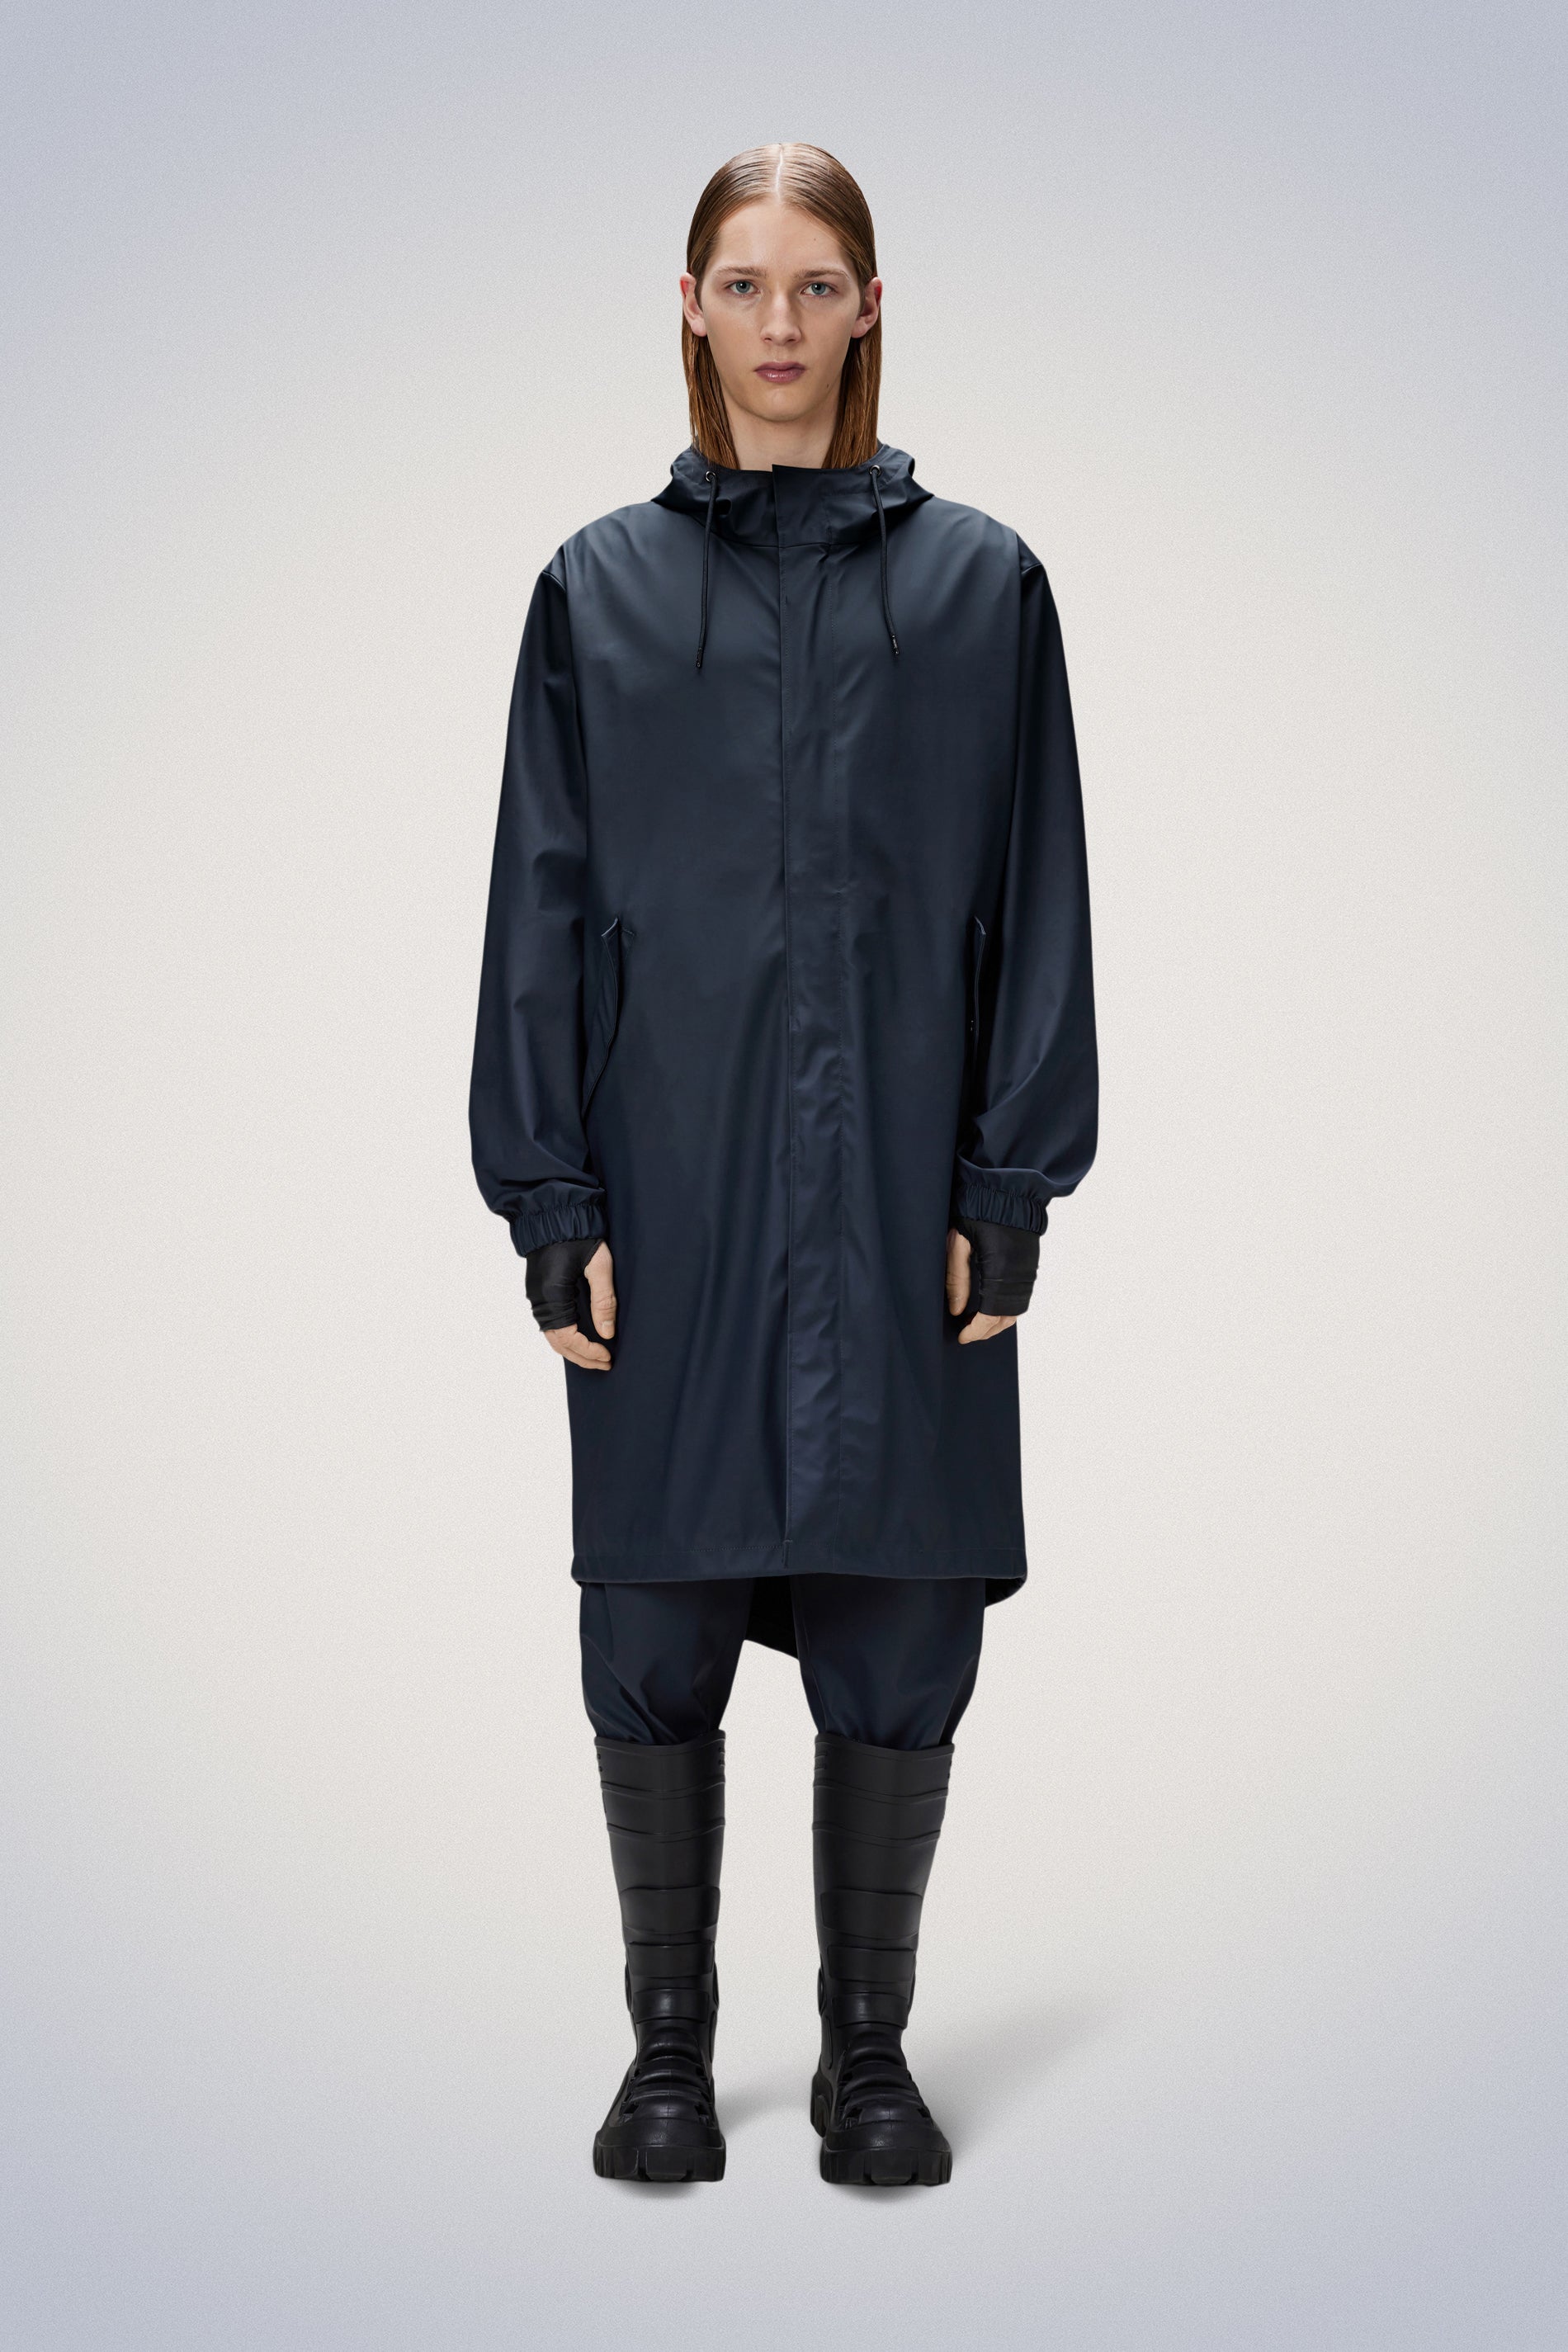 HANMENGXUAN Rain Suits for Men Waterproof Work Heavy Duty Rain Suit Rain coats Rain Gear Jacket and Pants Rainwear